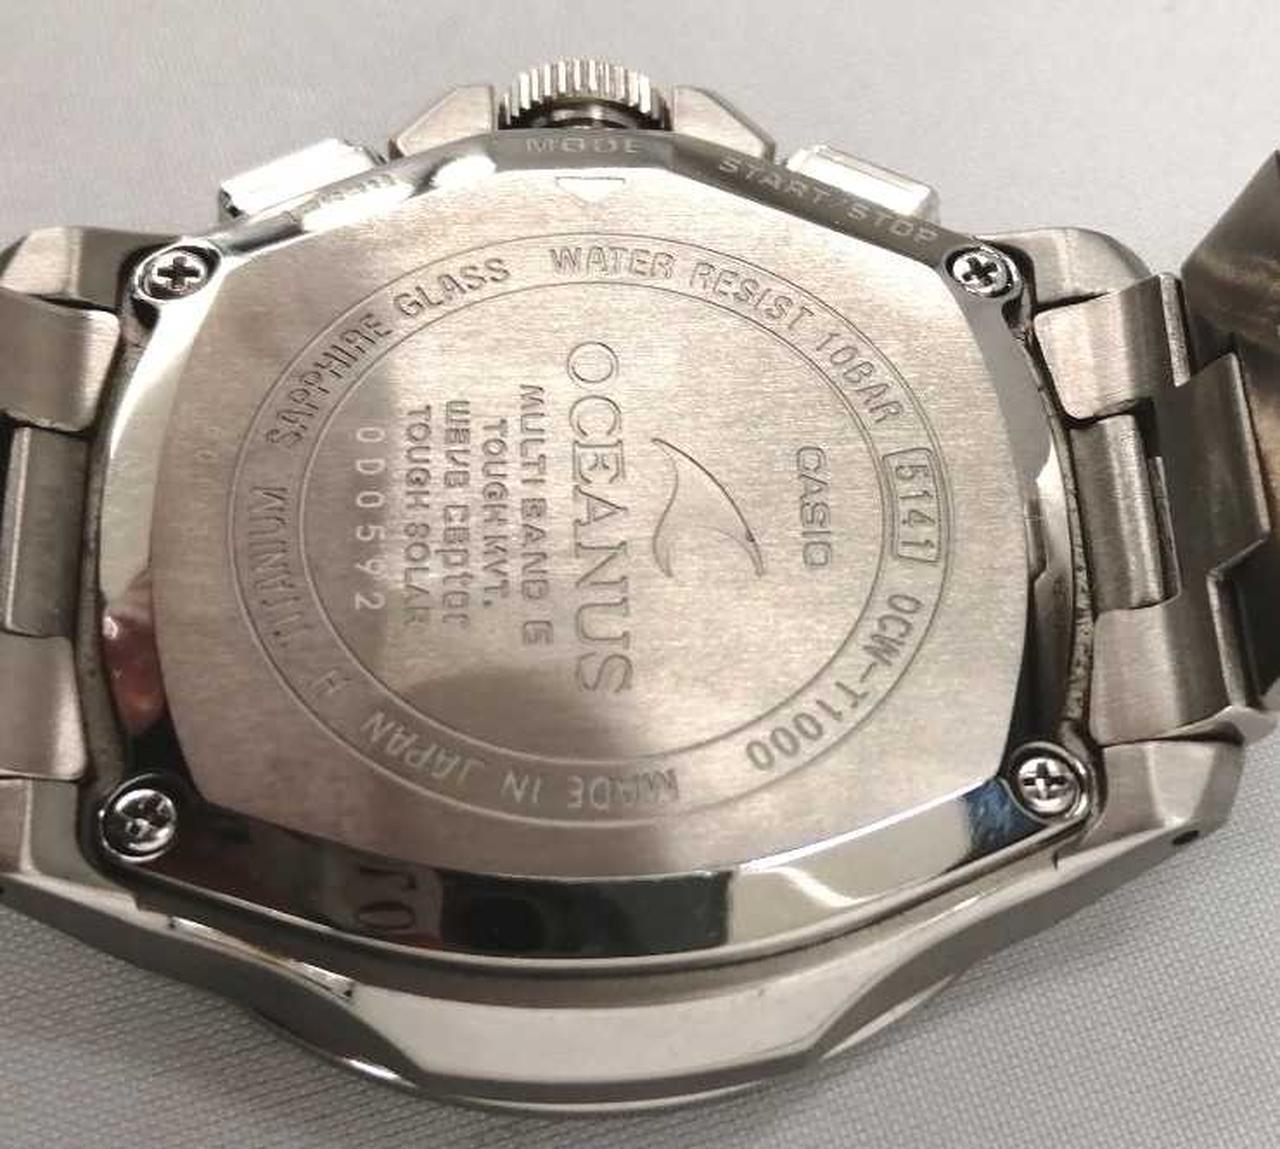 CASIO OCW-T1000 OCEANUS Men's Wrist Watch